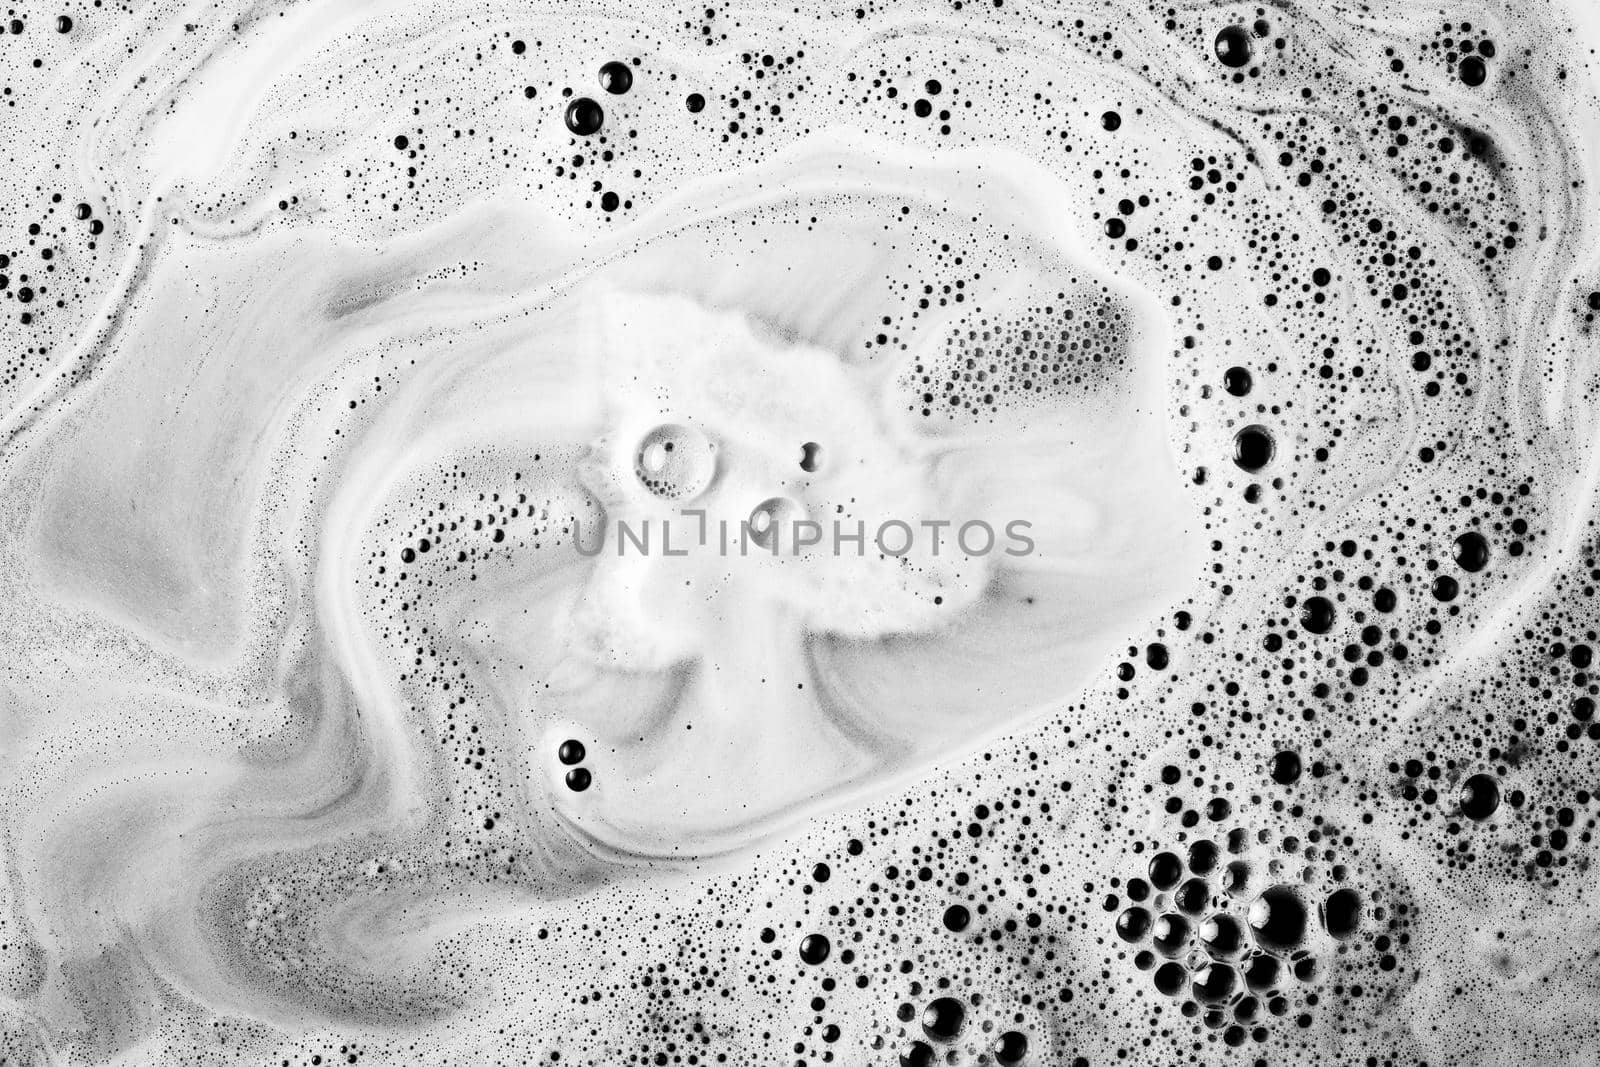 dissolving bath bomb tub water with foam. High quality beautiful photo concept by Zahard